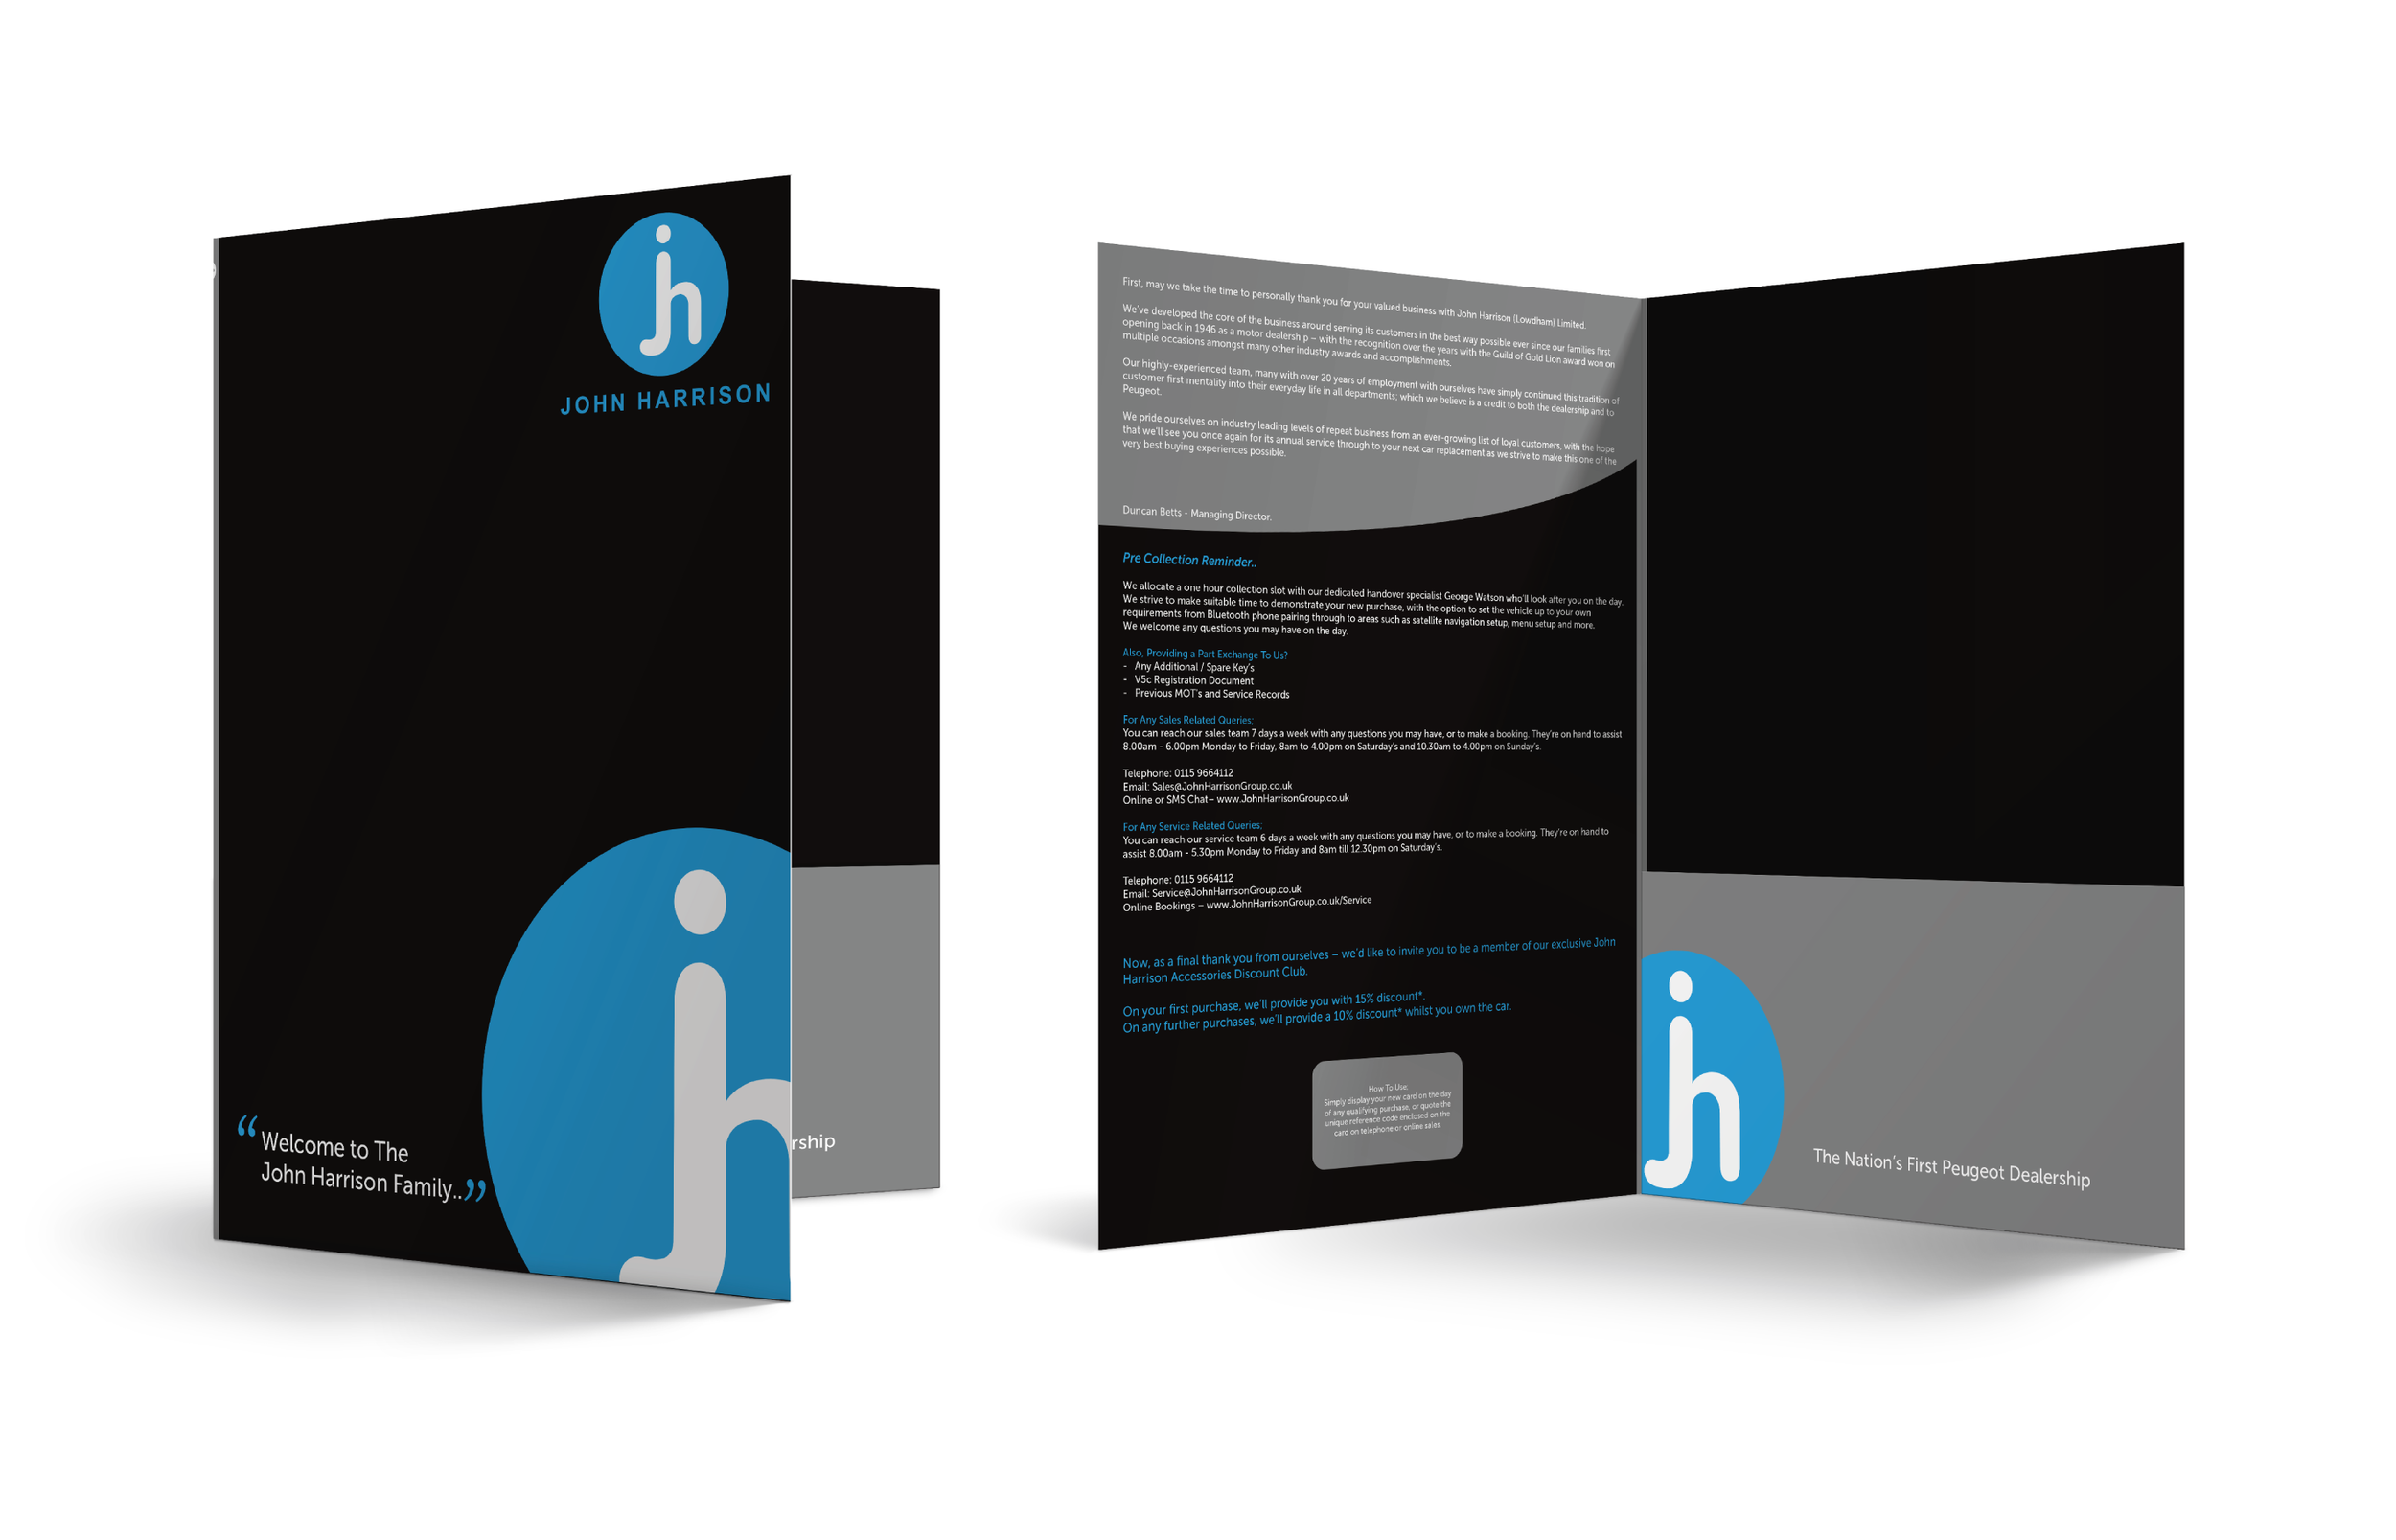 John Harrison Peugeot Presentation Folder Design (Copy)